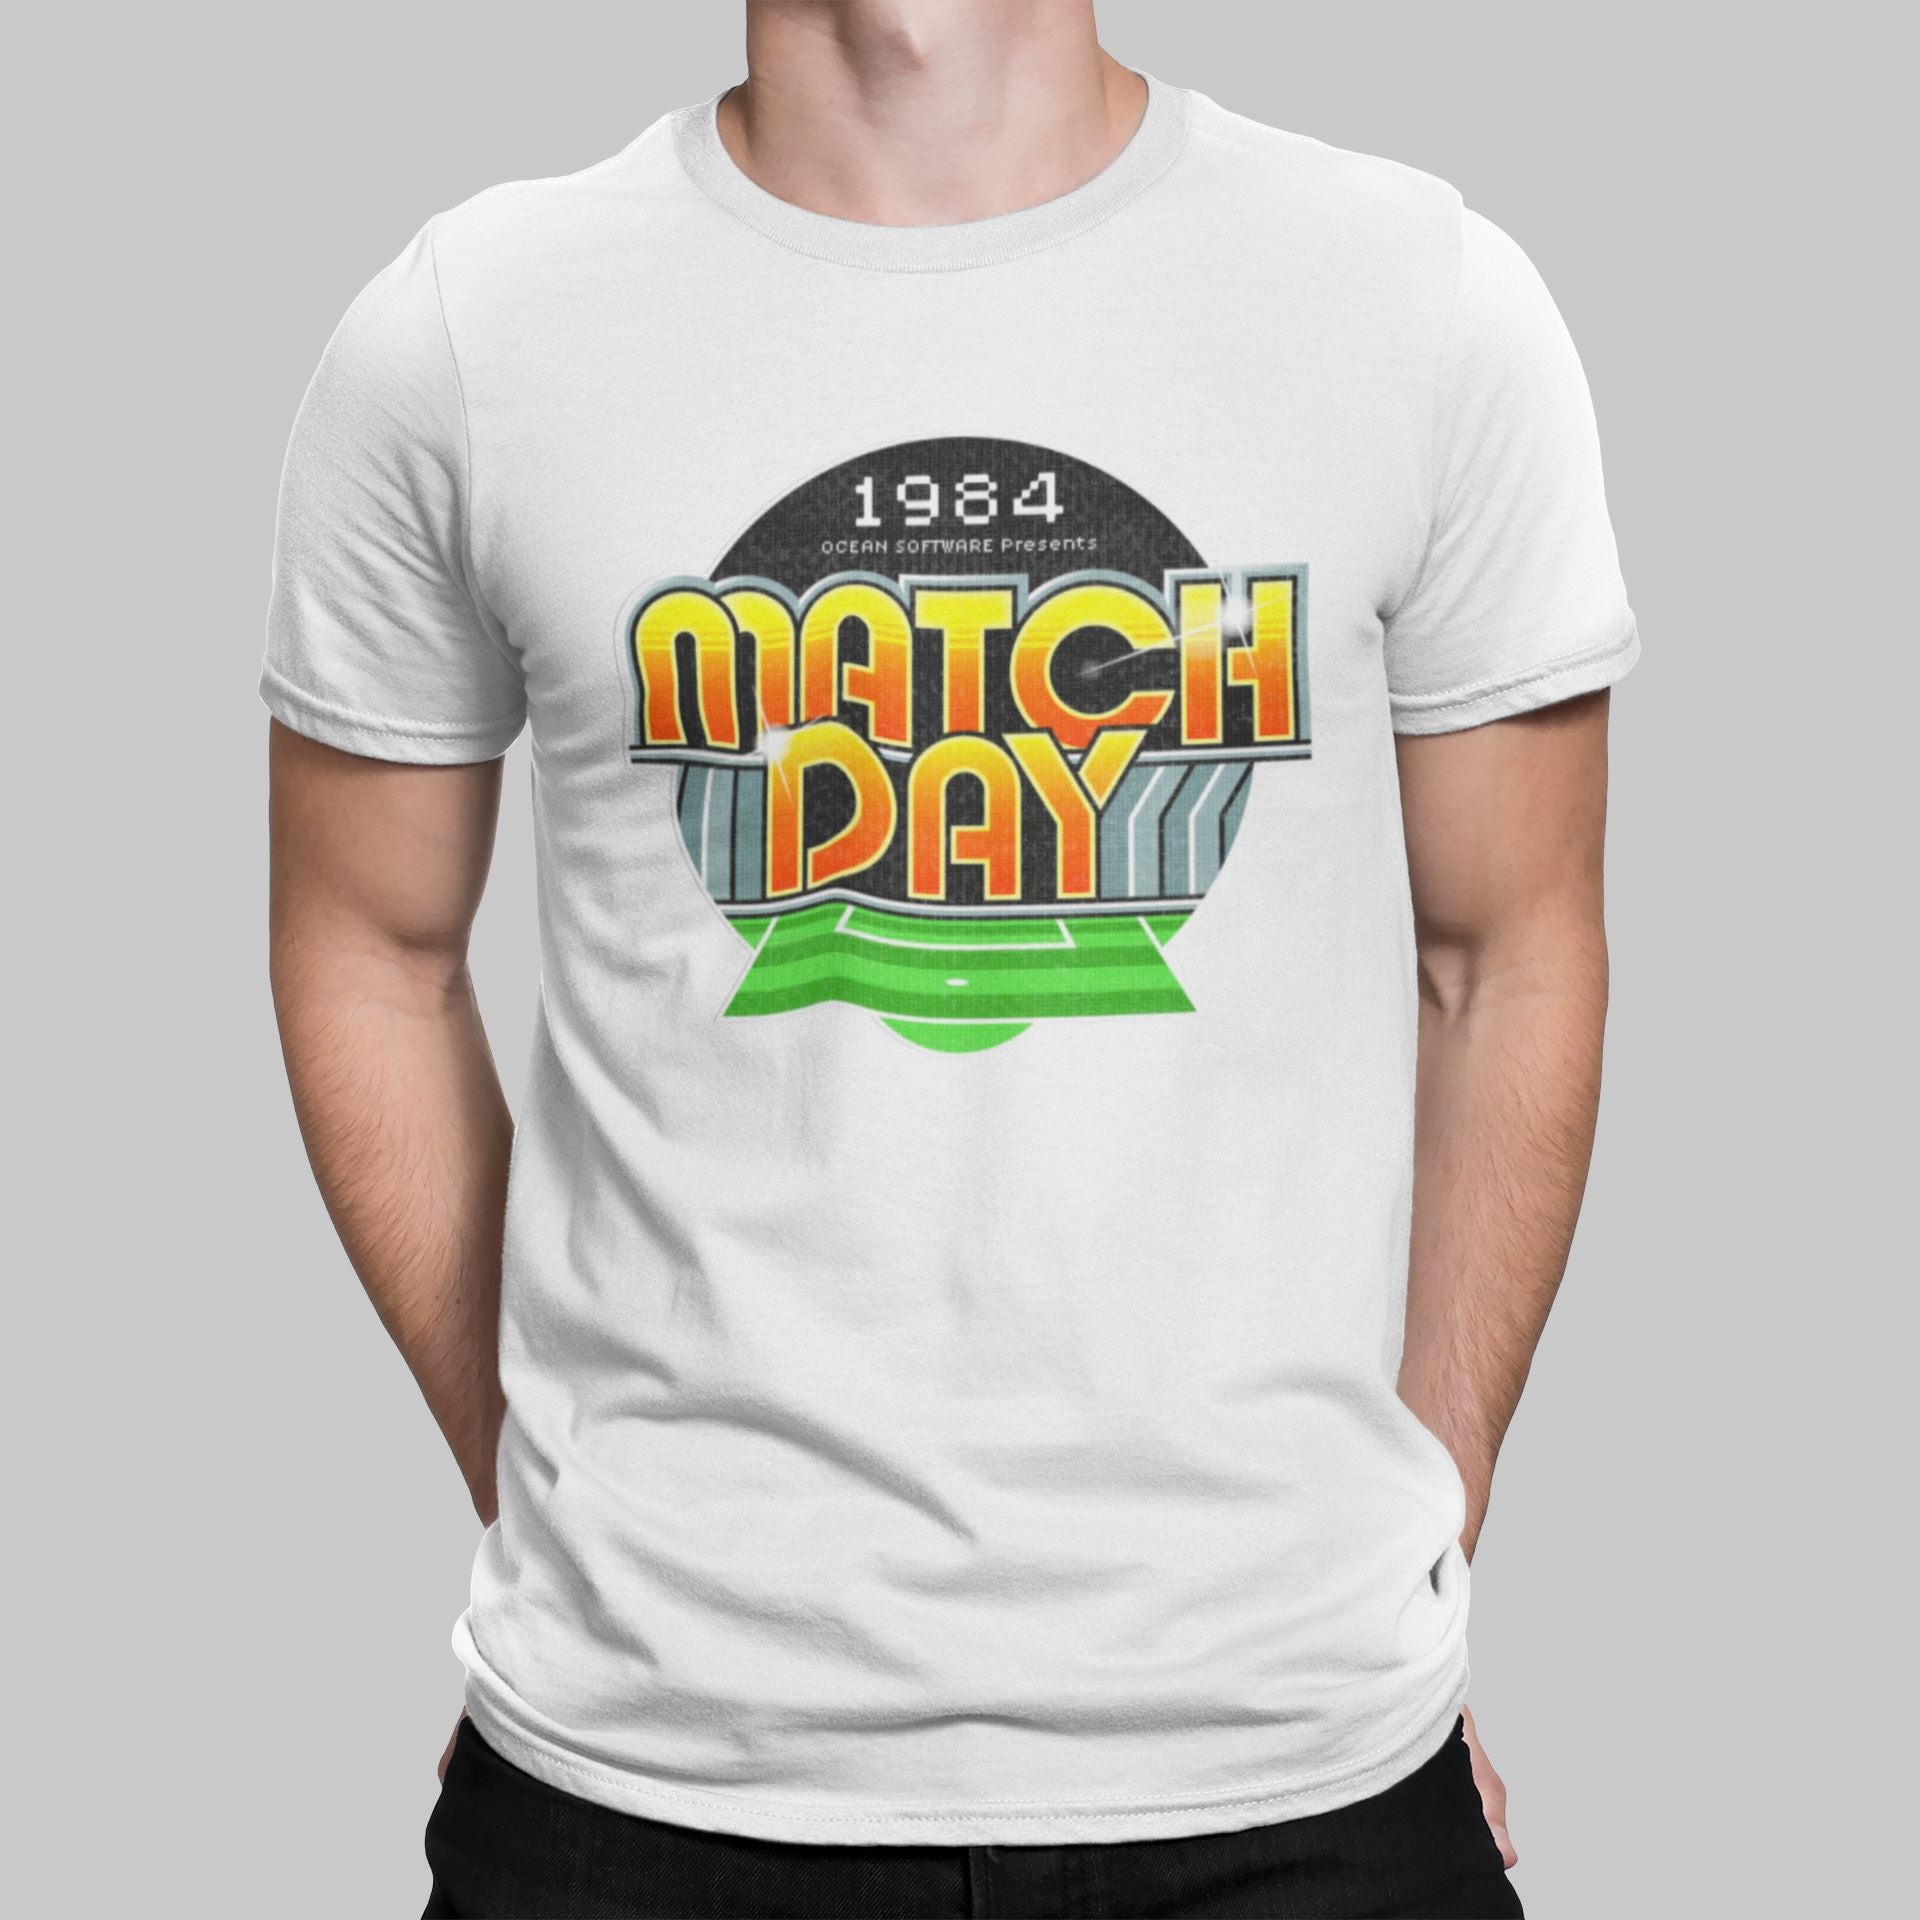 Match Day Retro Gaming T-Shirt T-Shirt Seven Squared Small 34-36" White 